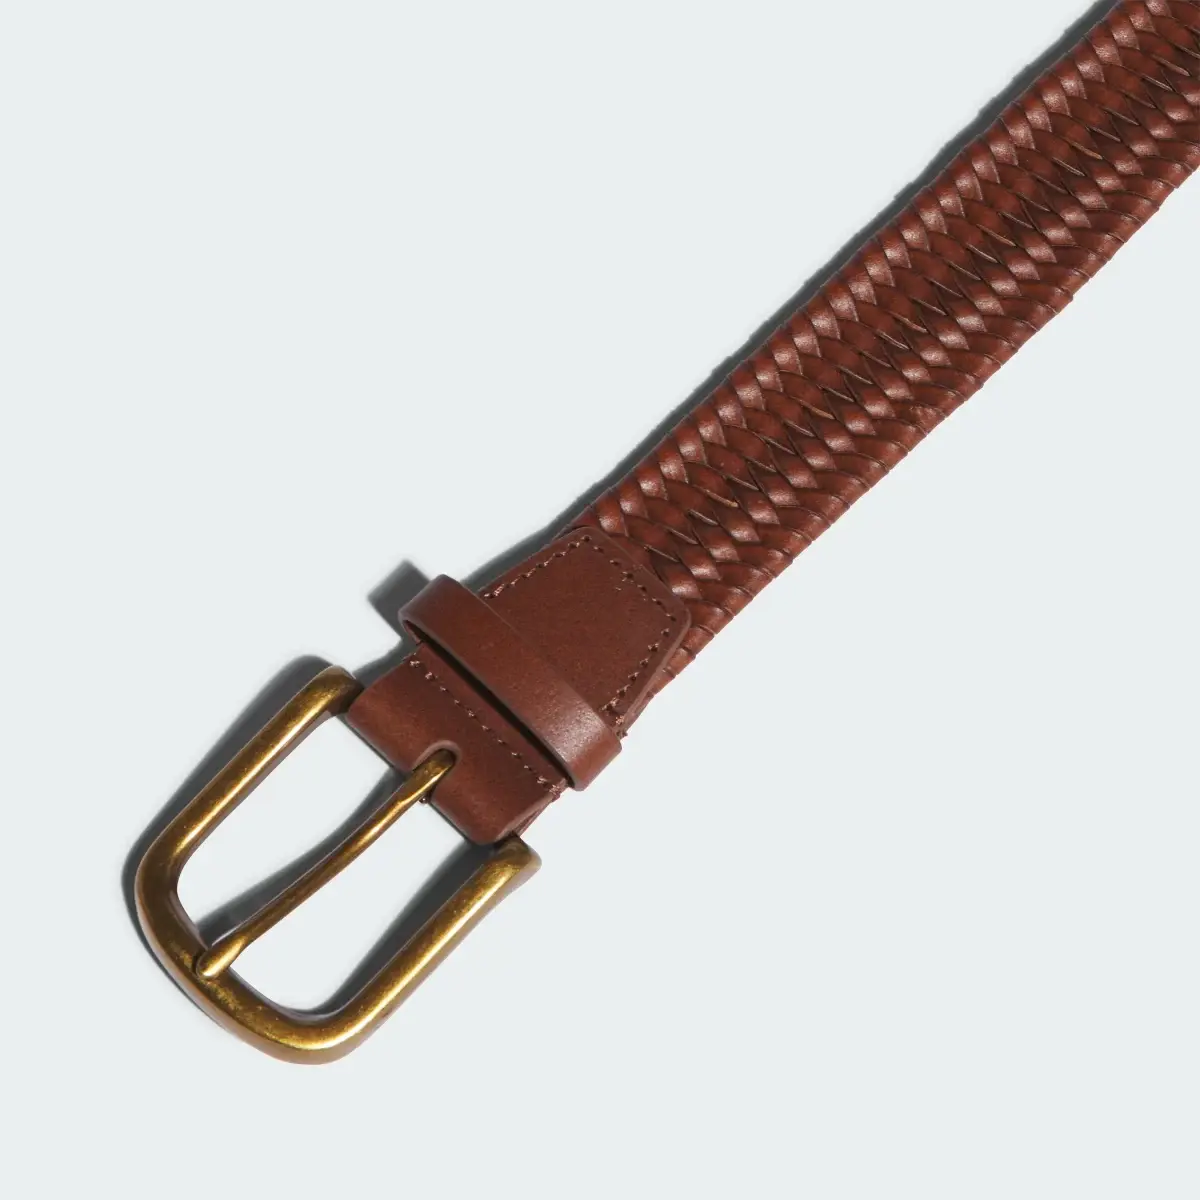 Adidas Golf Woven Leather Belt. 3